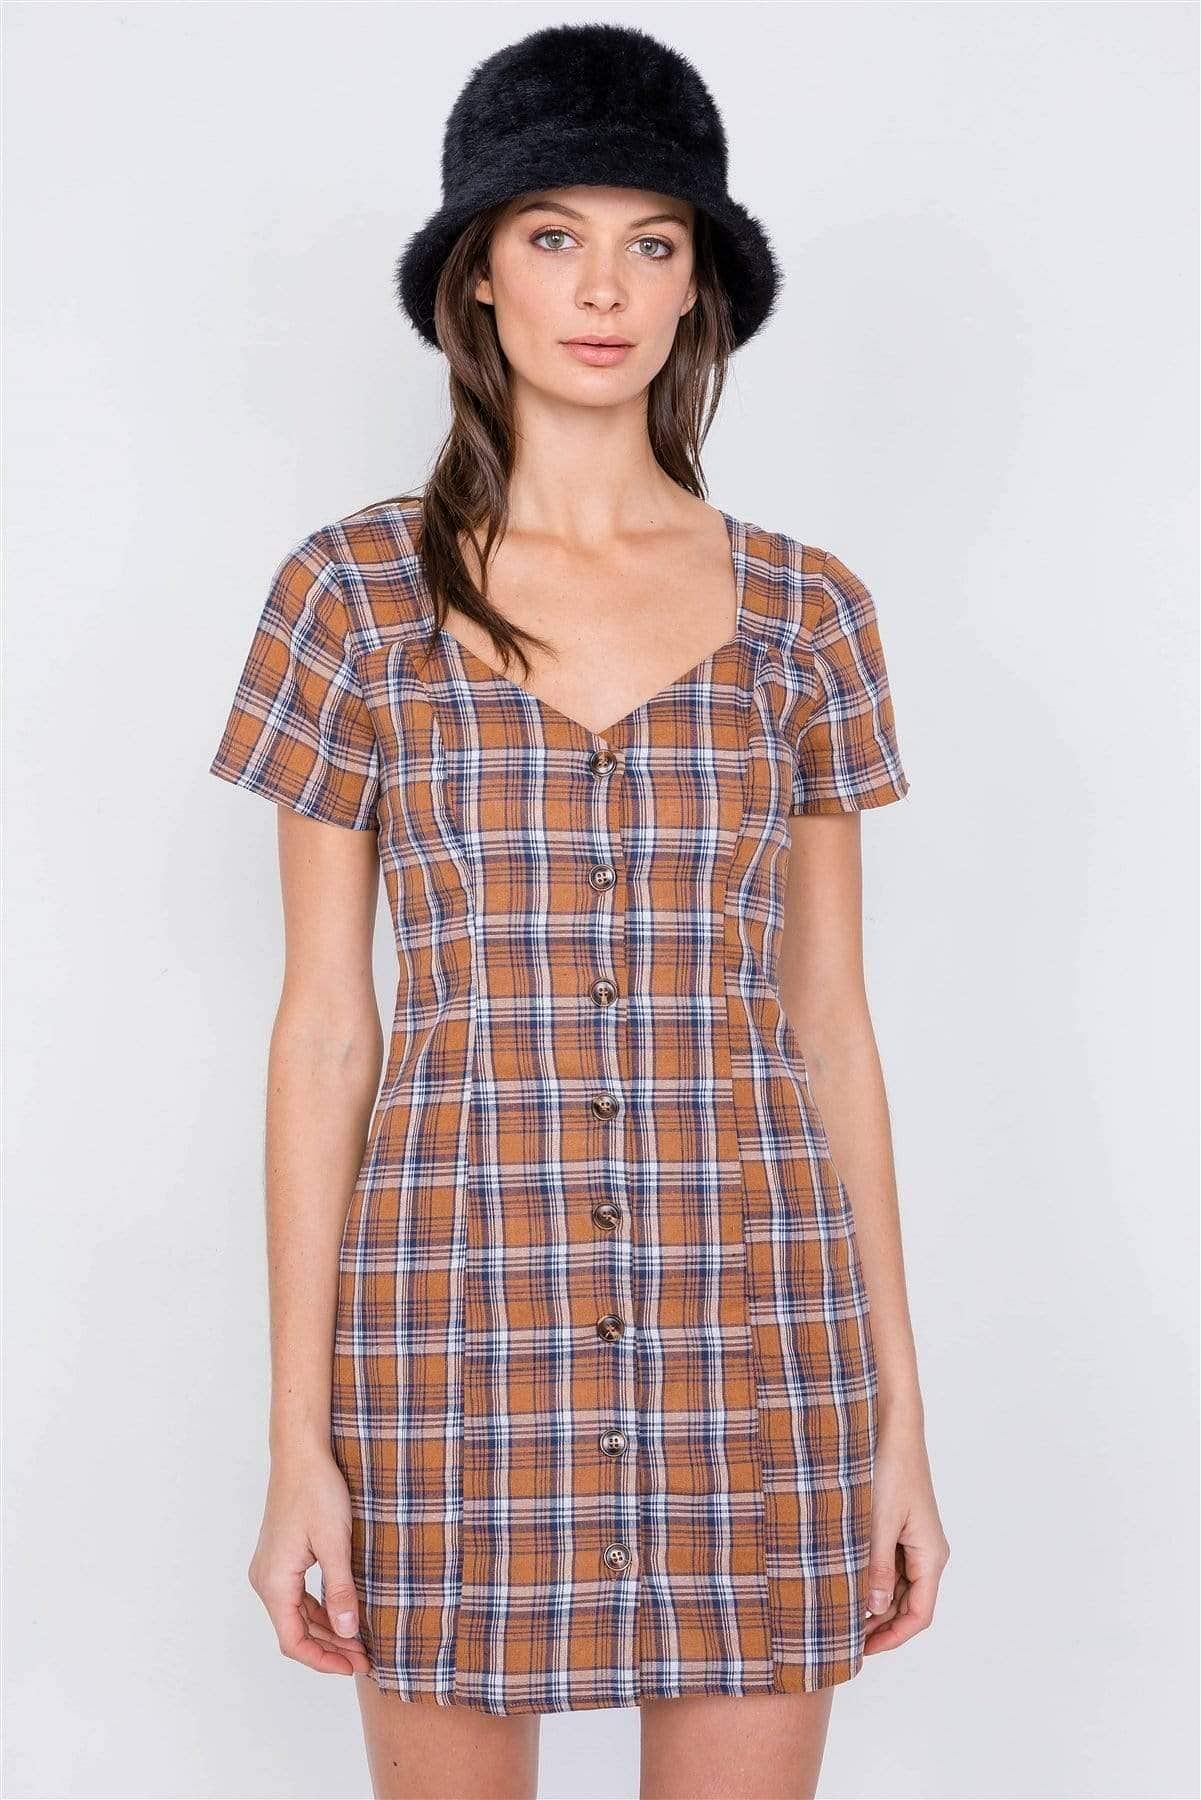 Short Sleeve Checkered Mini Dress - Shopping Therapy, LLC Dress